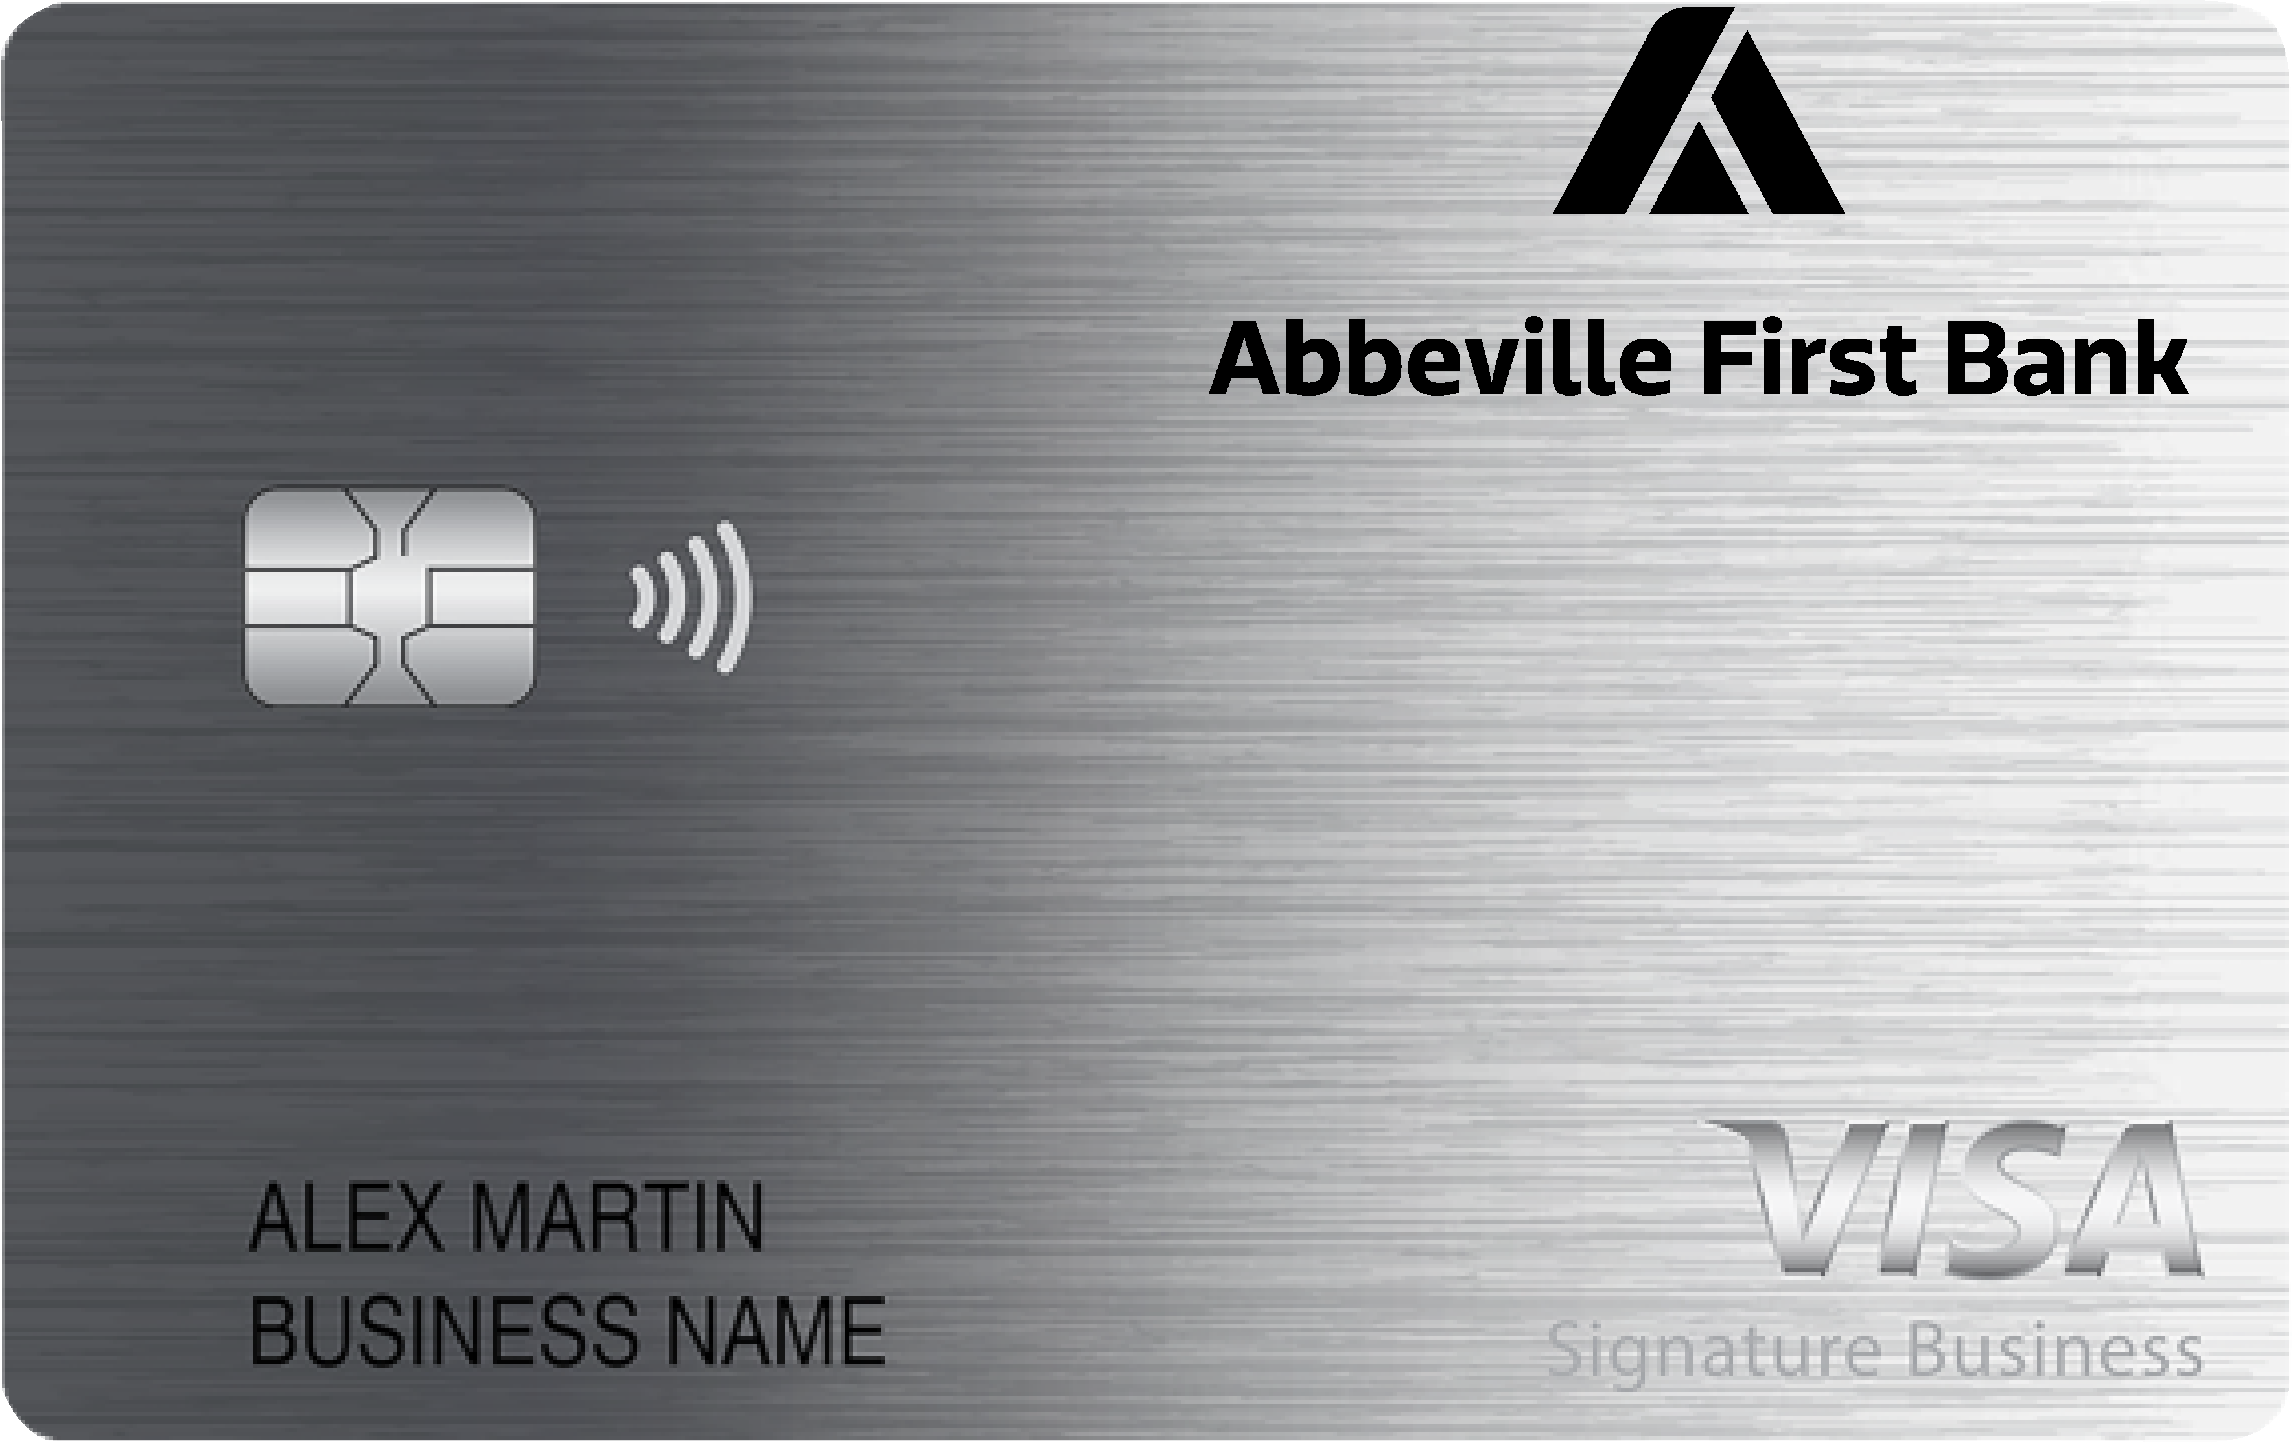 Abbeville First Bank Smart Business Rewards Card